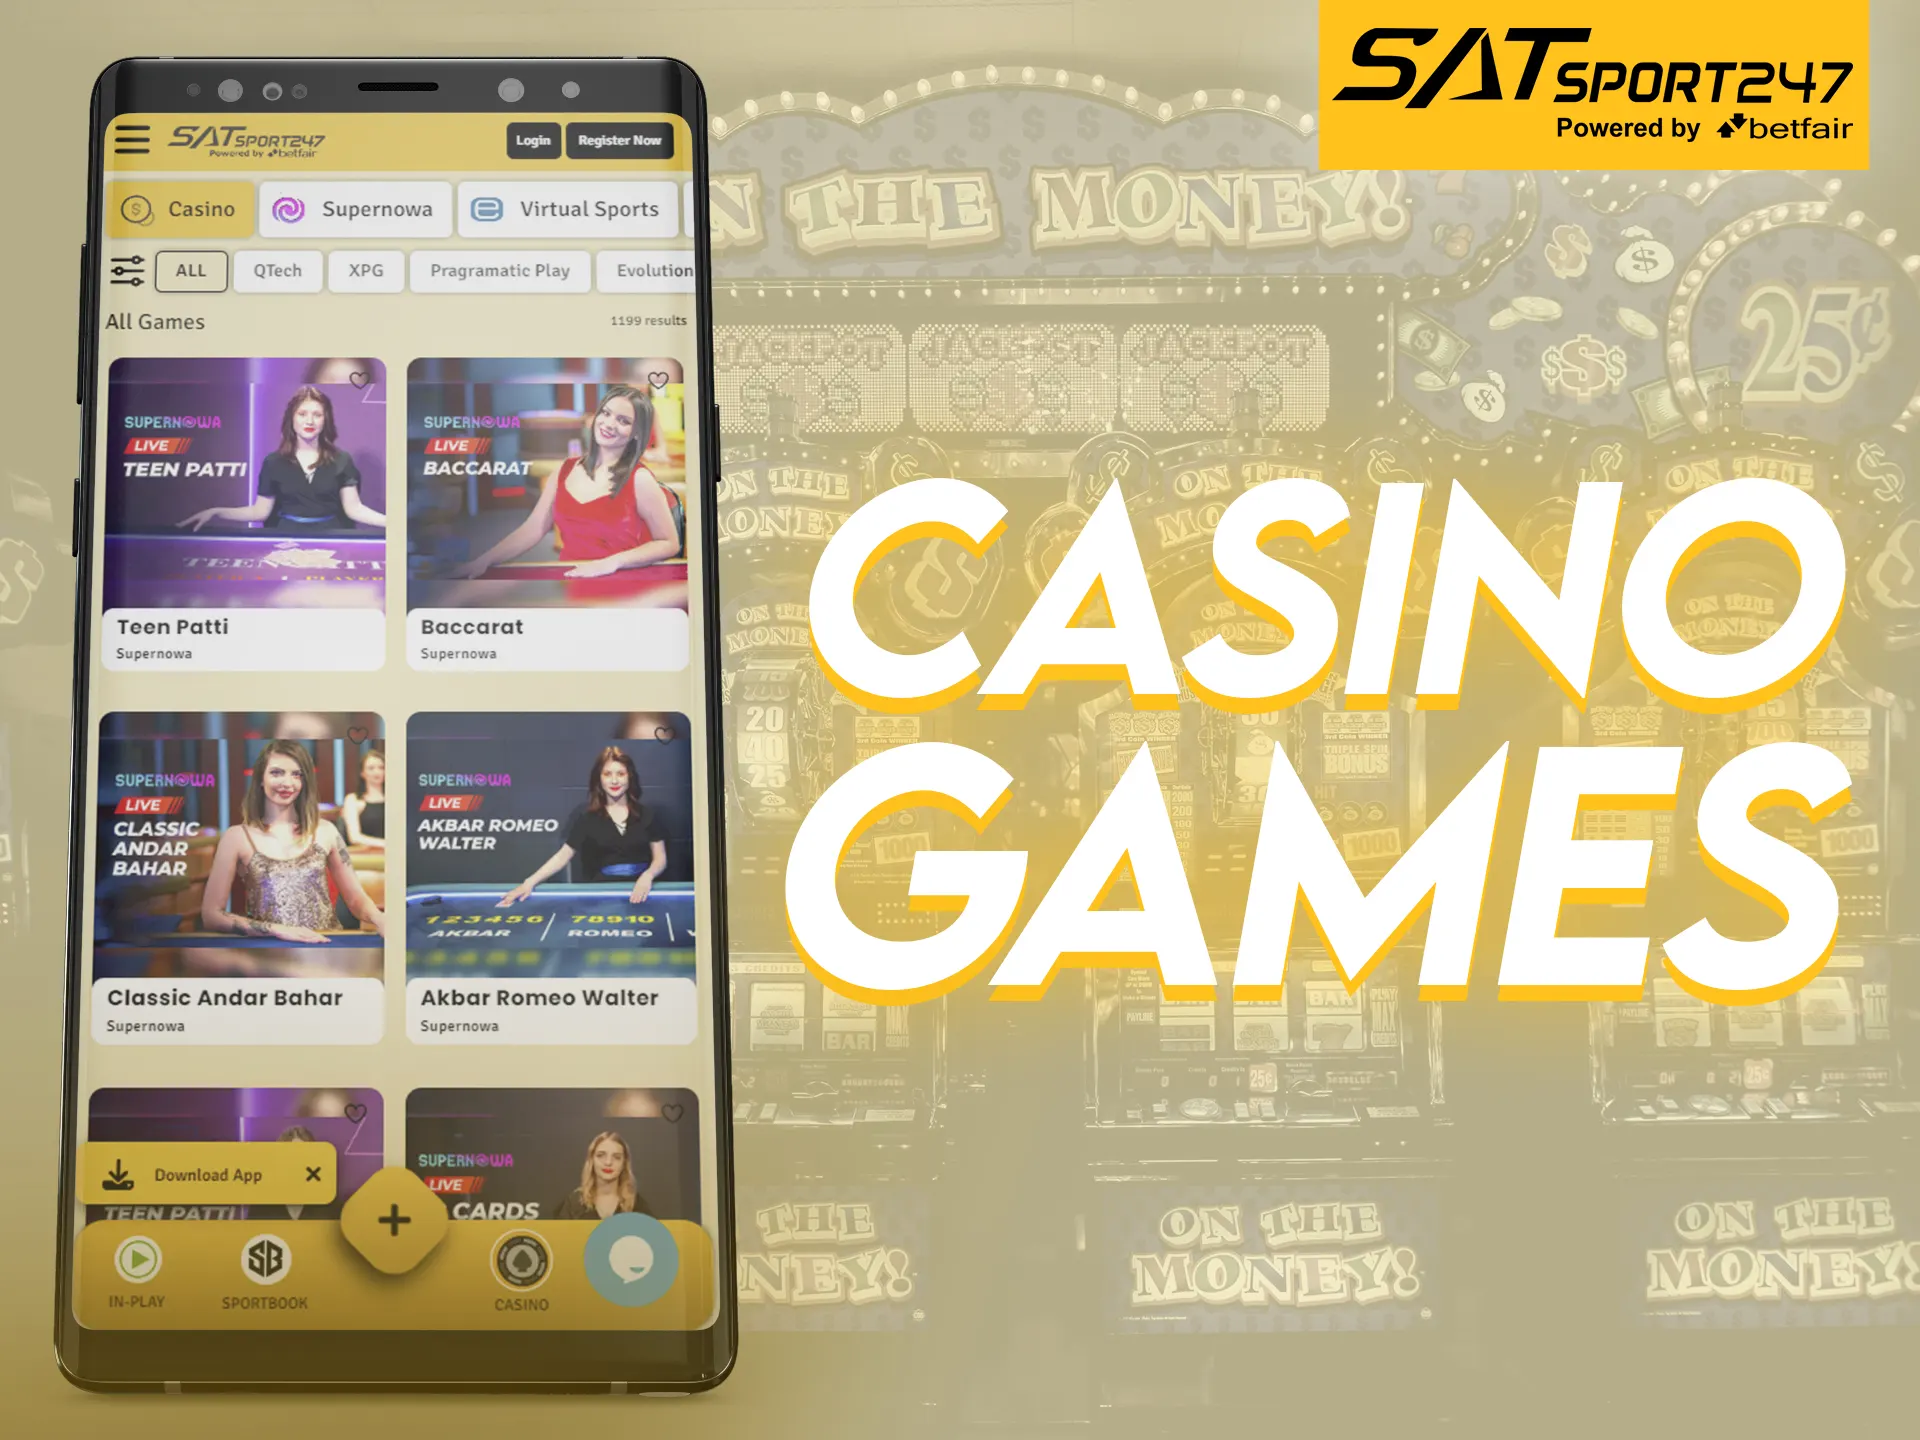 At Satsport247 app play a variety of casino games.